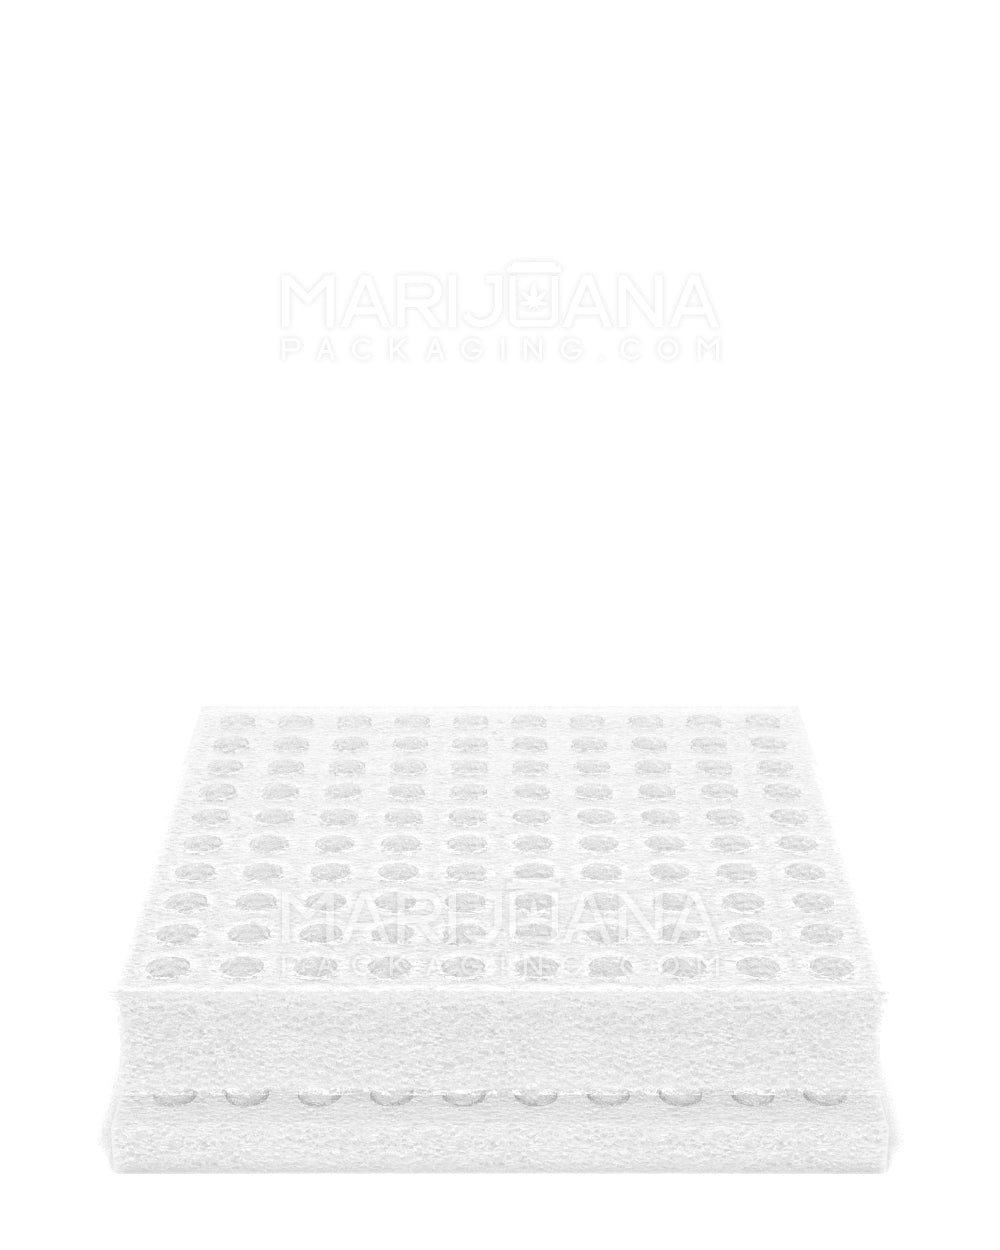 Reusable Foam Vaporizer Cartridge Filling Tray | 7in x 7in - White - 100 Slots - 1